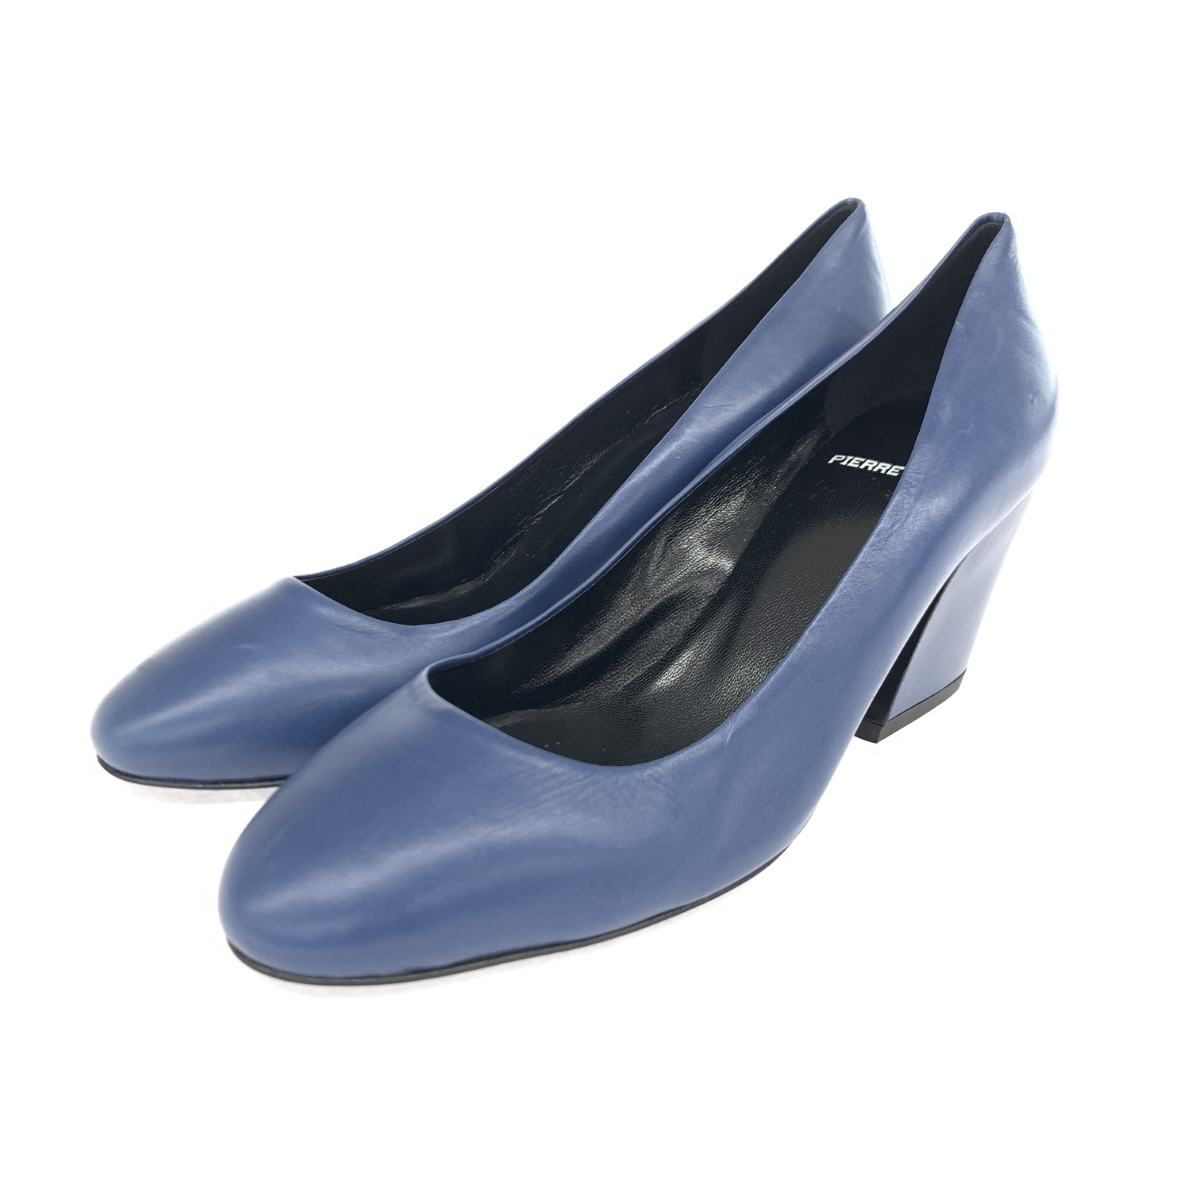  beautiful goods *Pierre Hardy Pierre a Rudy tea n key heel pumps 36 1/2* blue leather lady's shoes shoes shoes